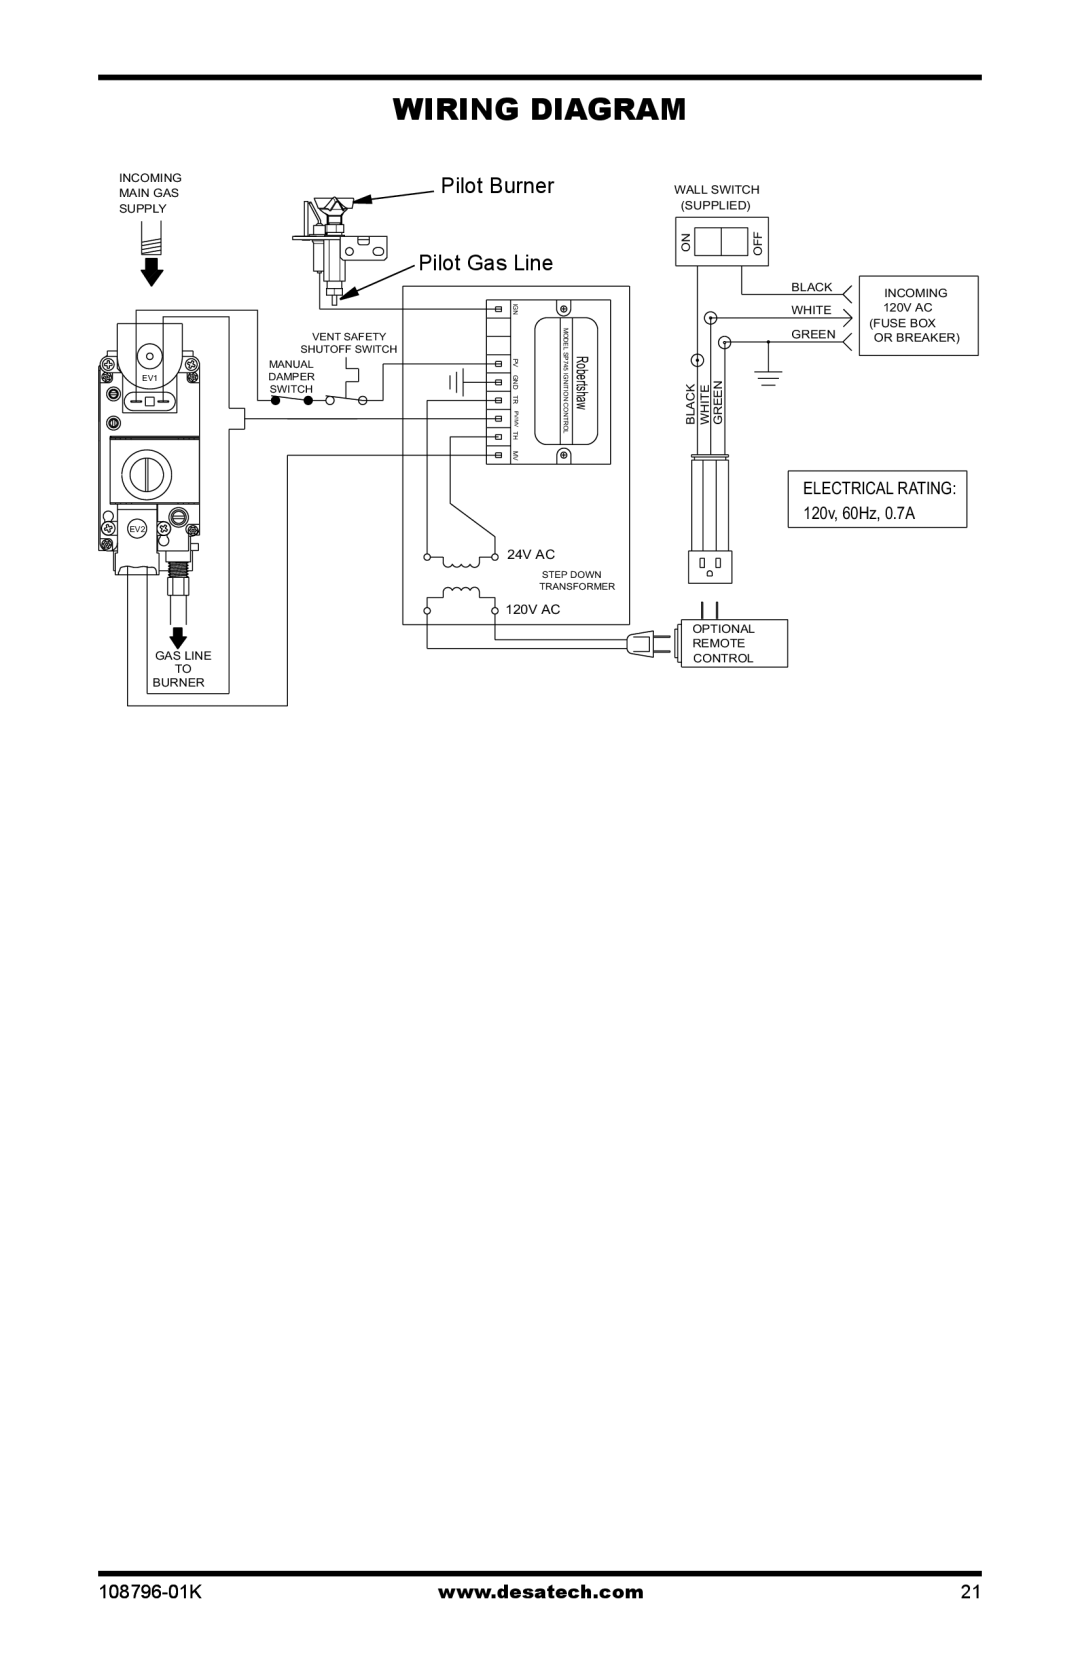 Desa H) AND VM42EP(B, VM36EP installation manual Wiring Diagram, Pilot Burner Pilot Gas Line 